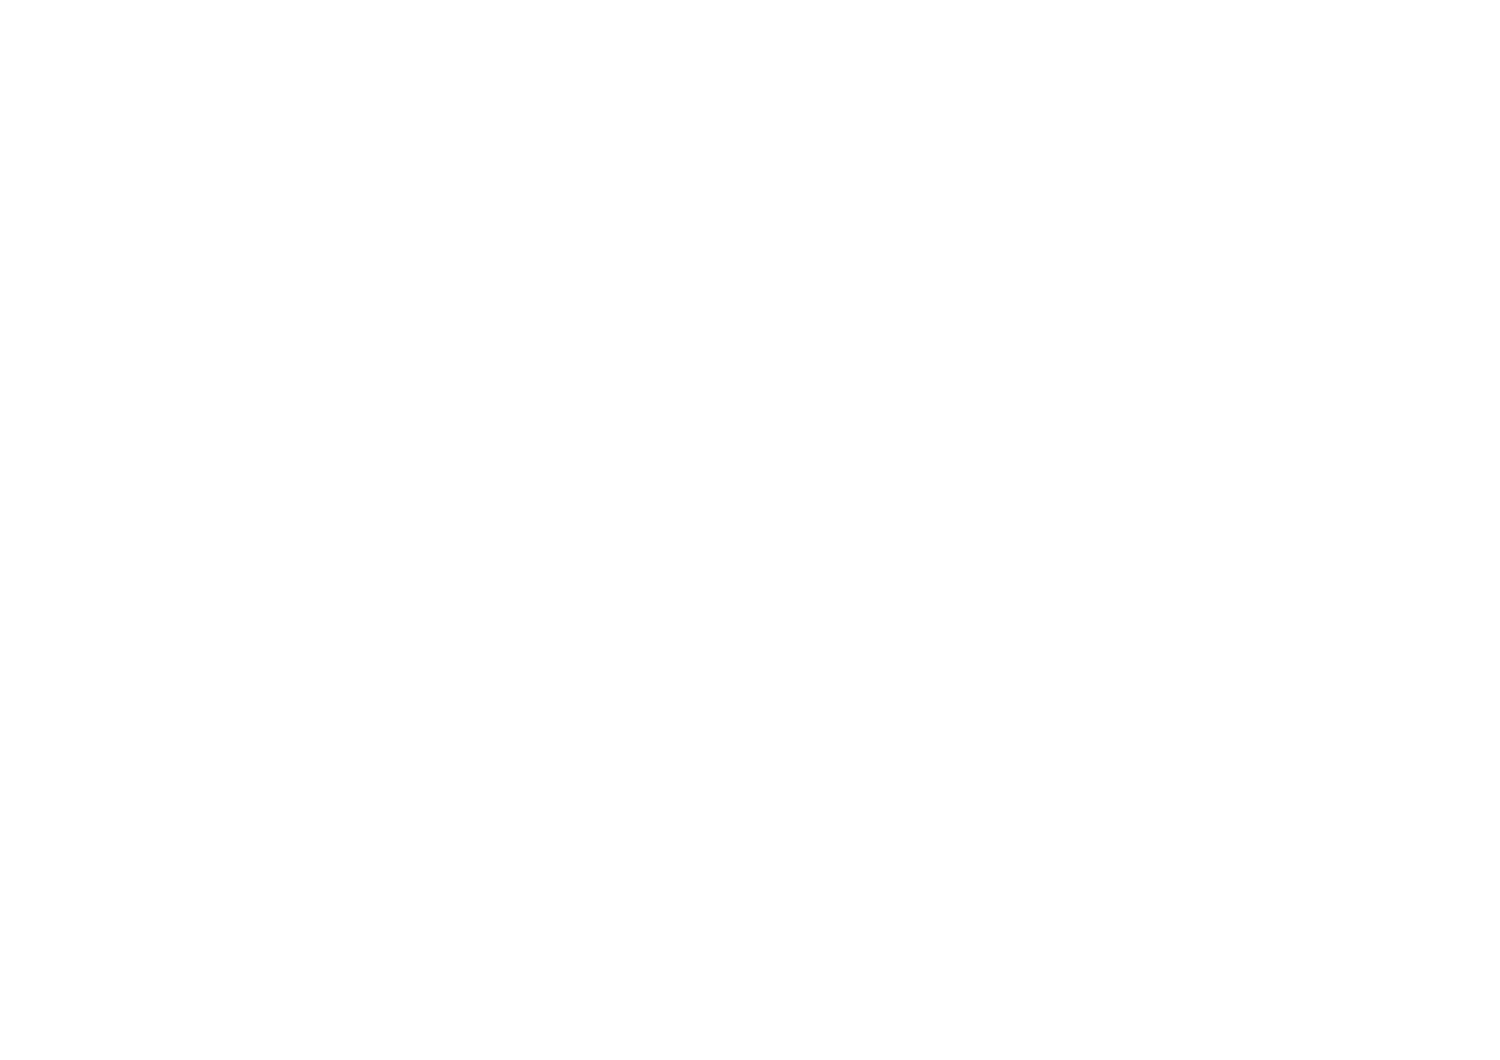 NT EDUCATION